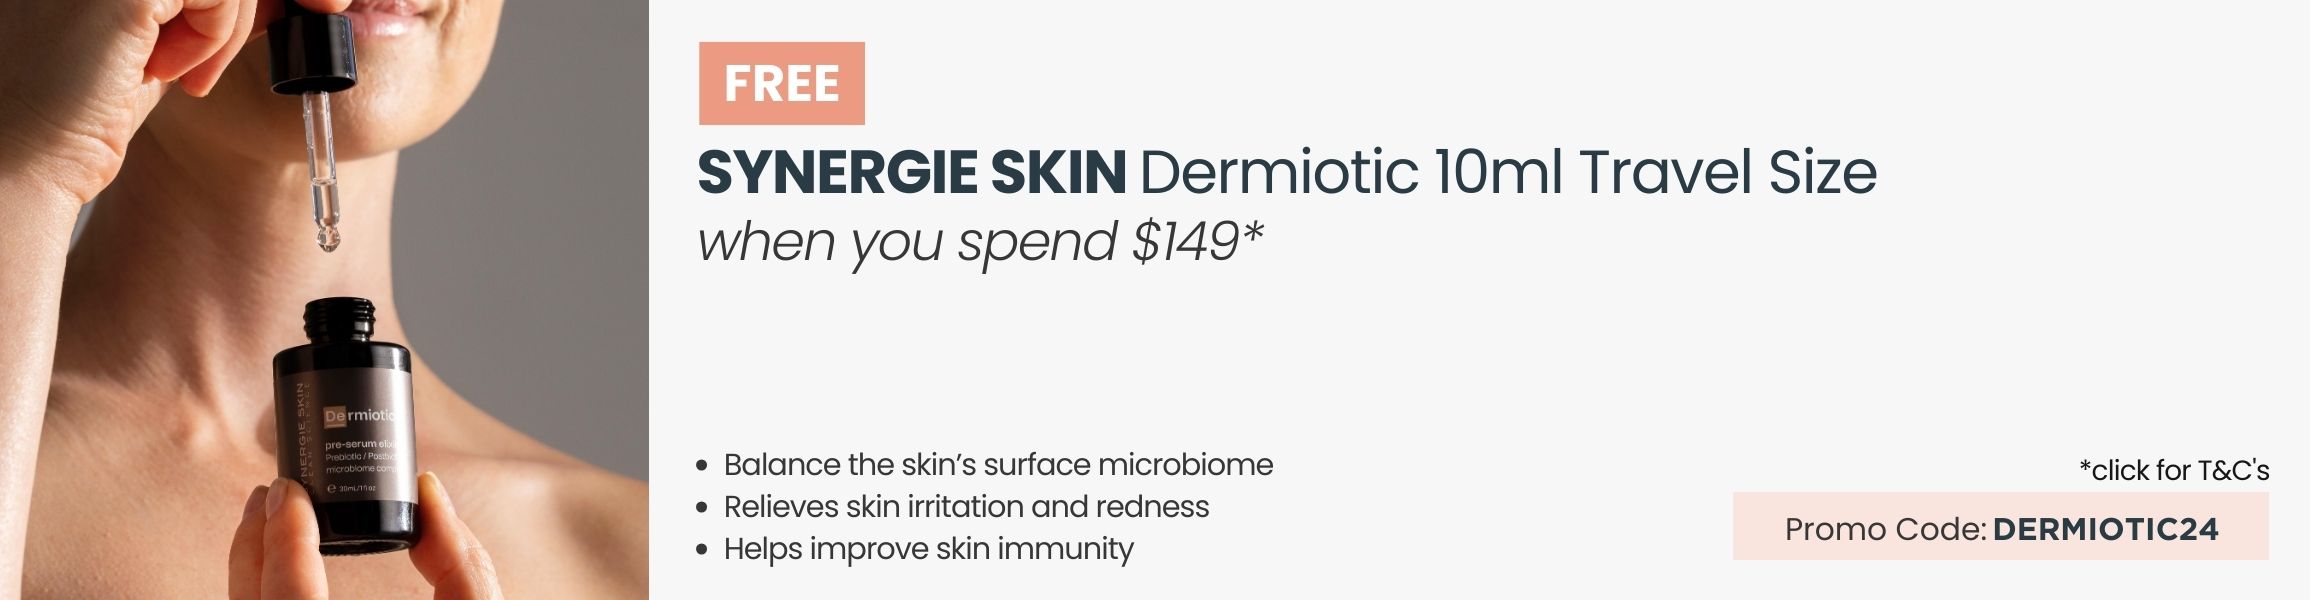 FREE Synergie Skin Dermiotic 10ml Travel Size.  Min spend $149. Promo Code DERMIOTIC24